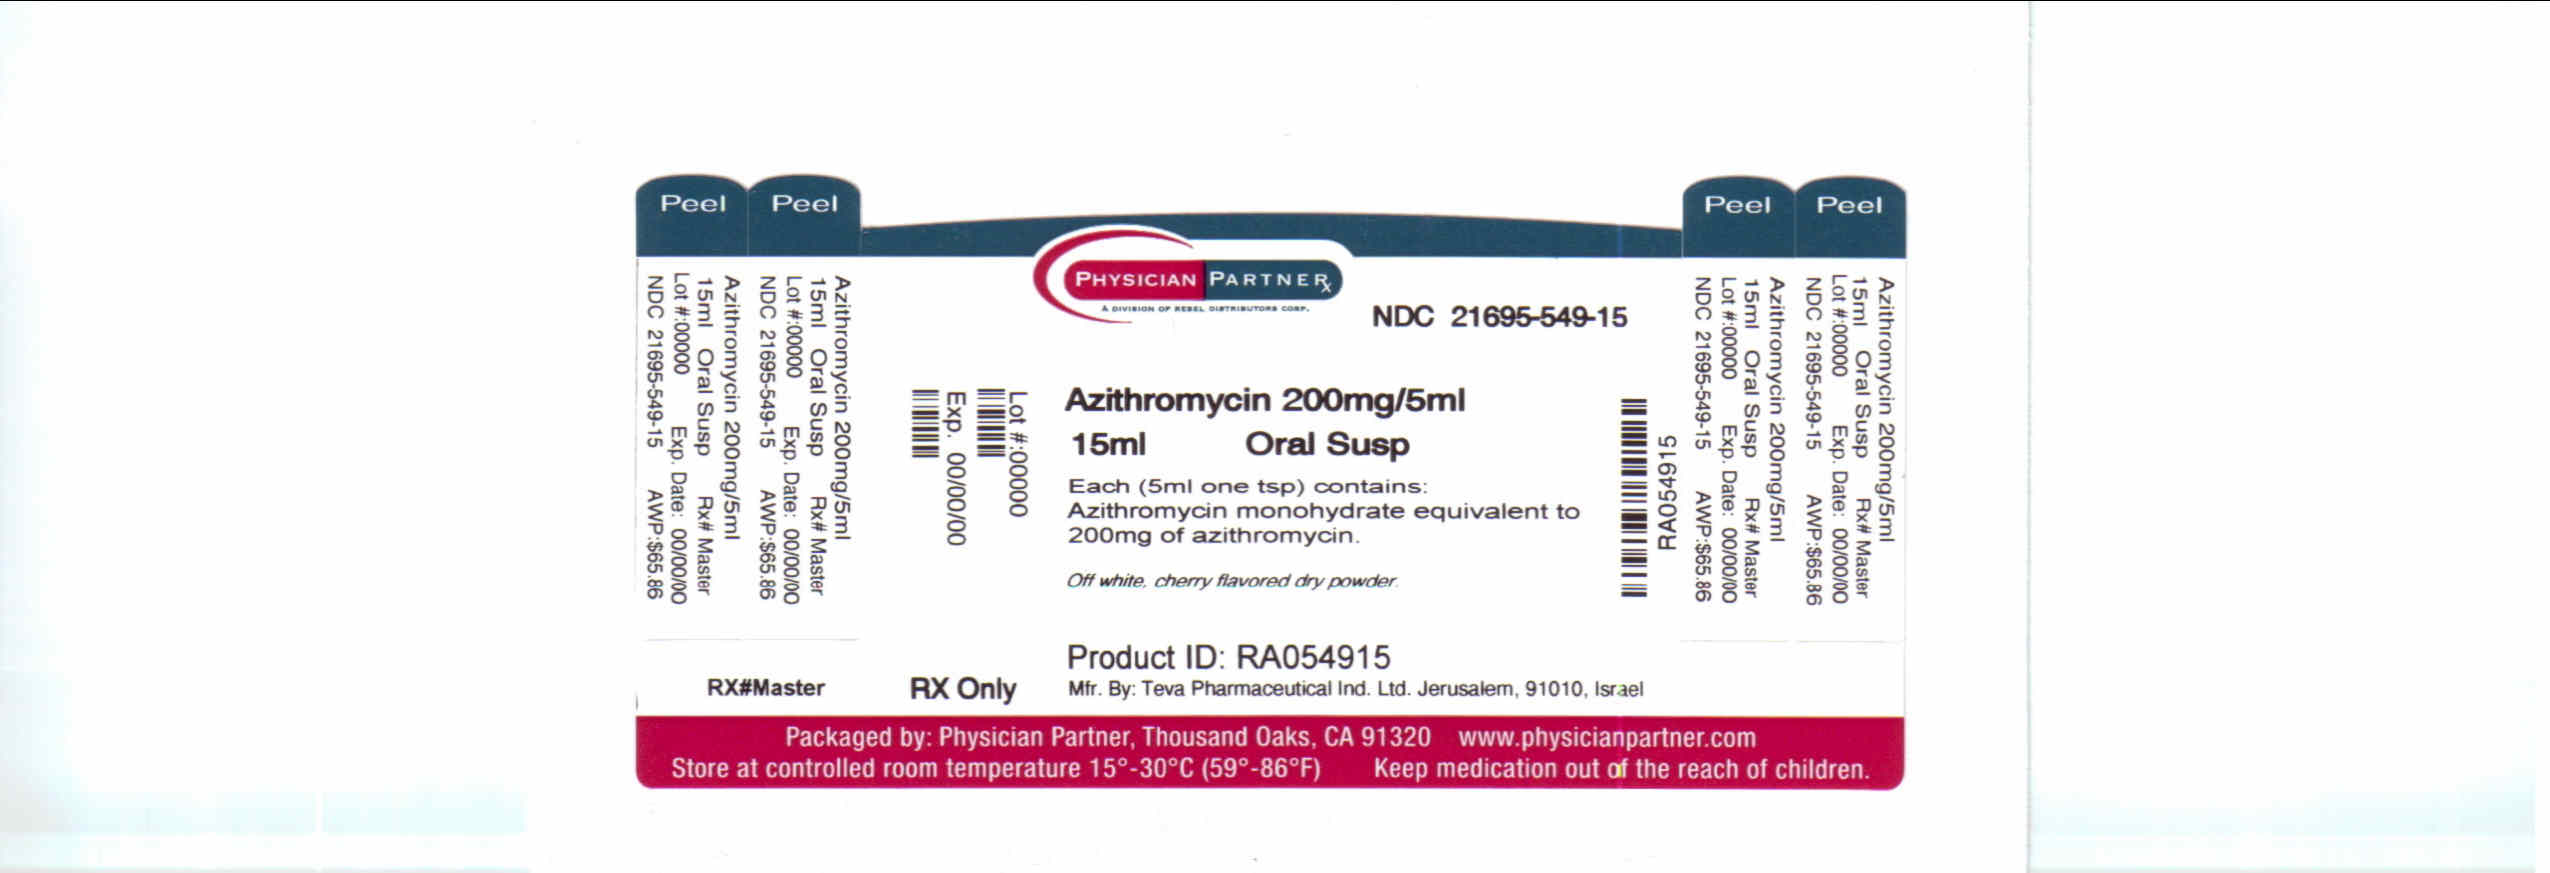 Azithromycin 200mg/5ml Label